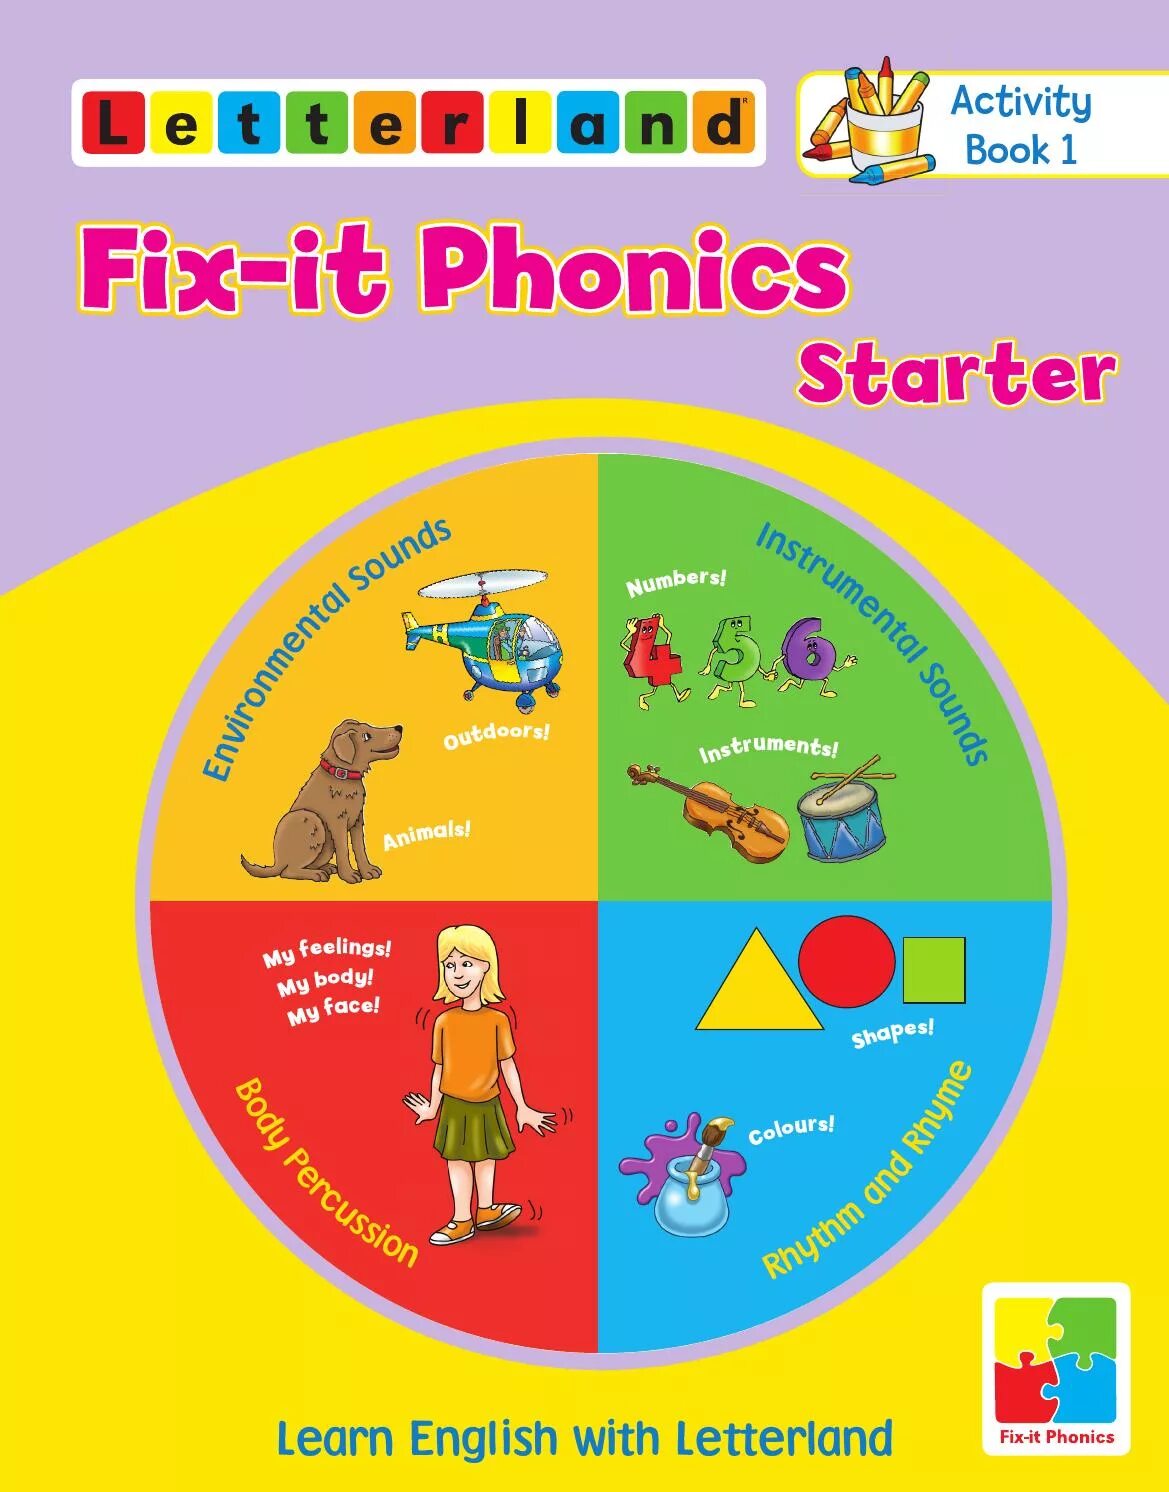 Active book 1. Fix and Phonics. Fix it Phonics. Activity book 1. Fix it Phonics 1 content.